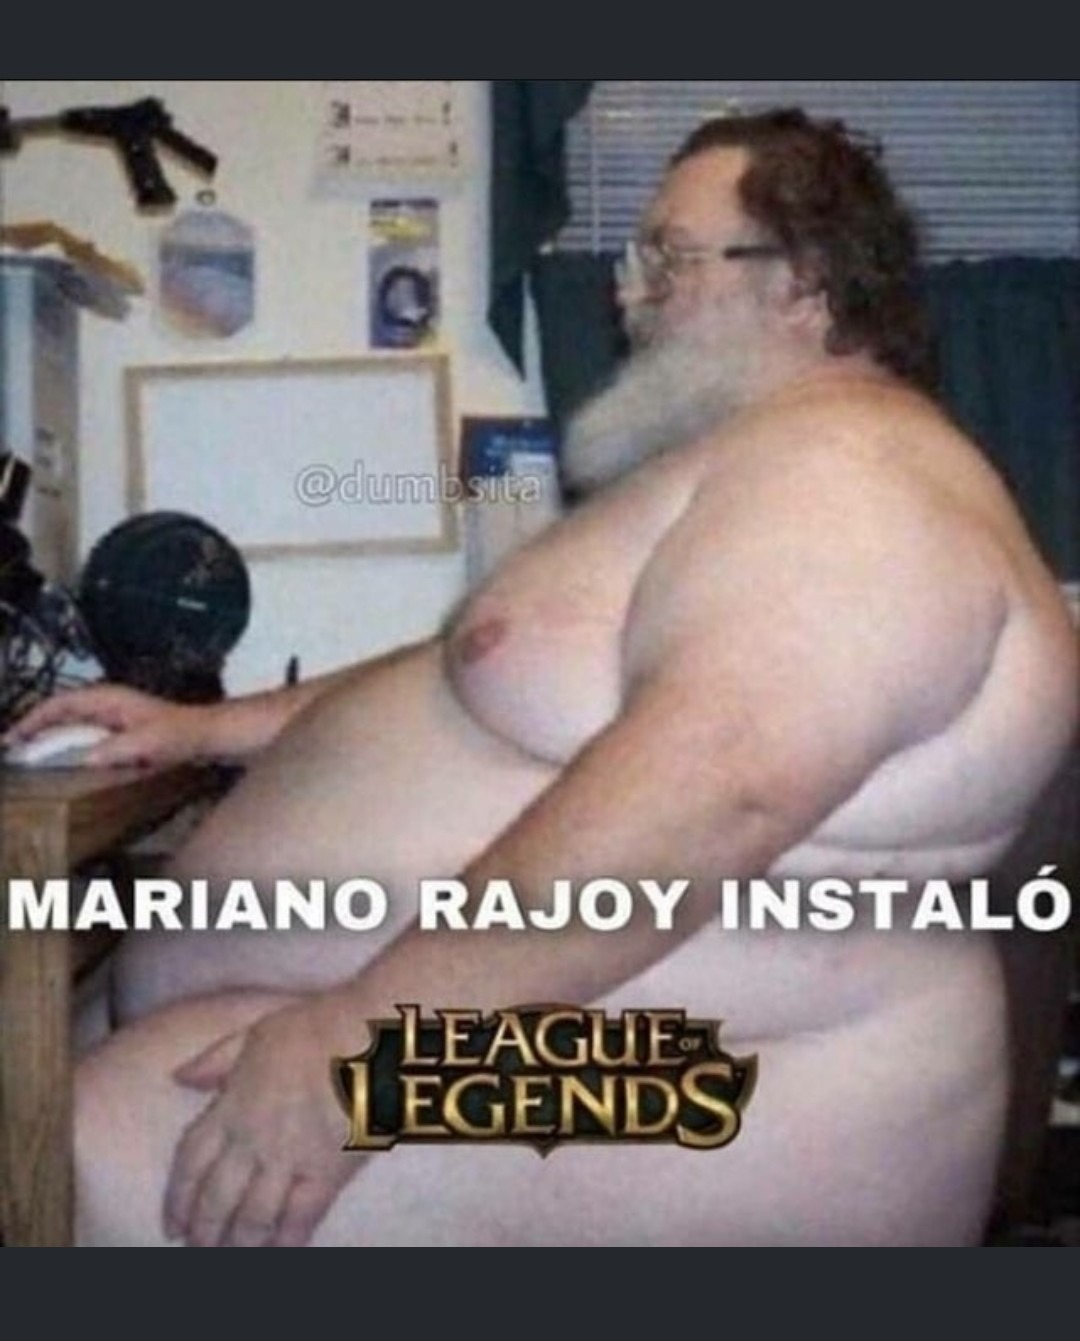 Rajoy jajaespaña - meme